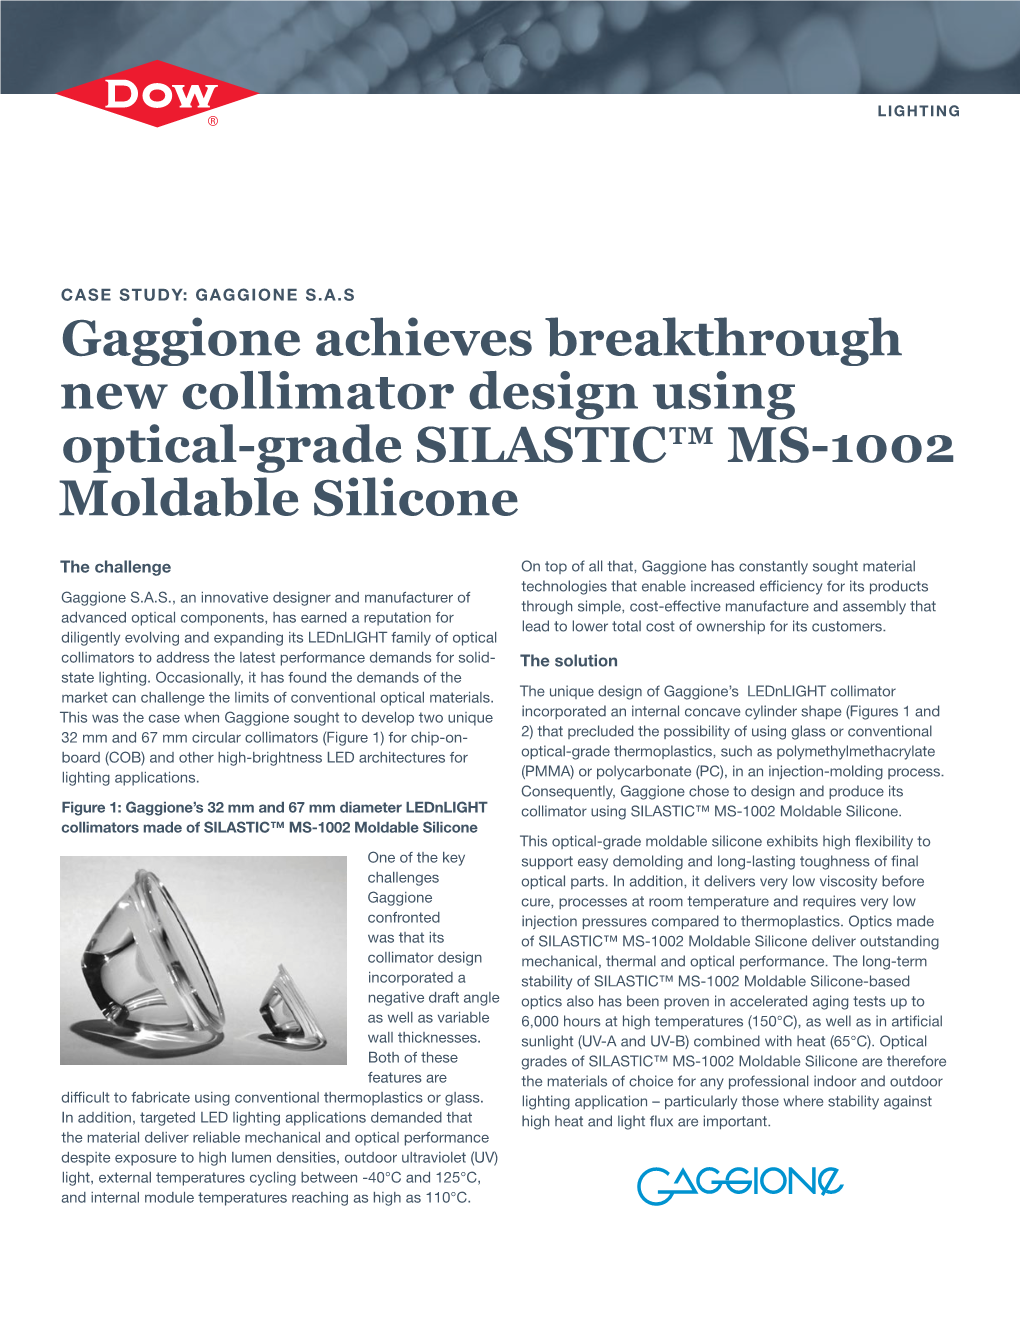 Gaggione Achieves Breakthrough New Collimator Design: Case Study